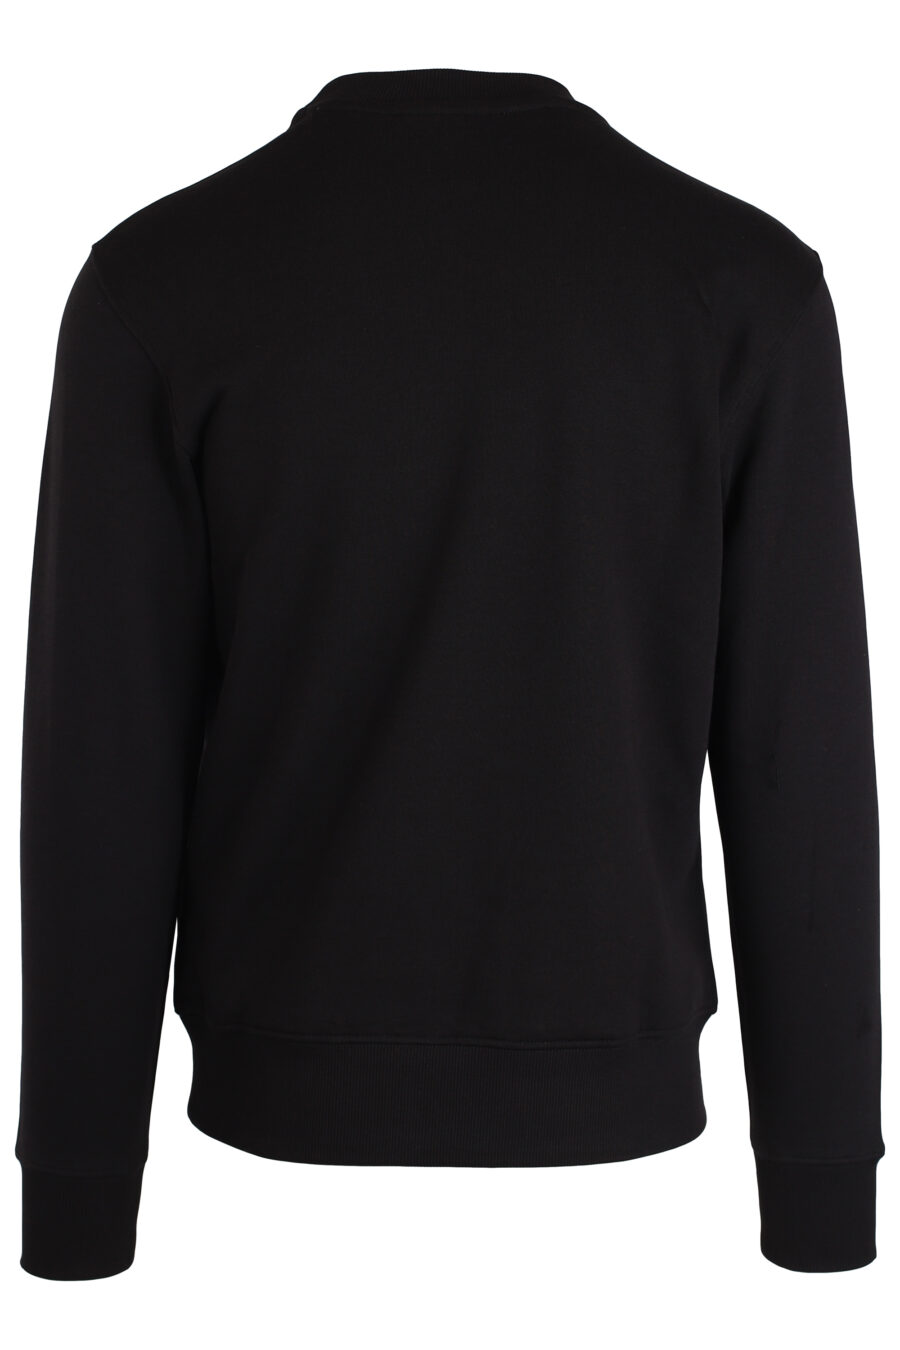 Schwarzes Sweatshirt mit neongrünem Maxilogo - IMG 3968